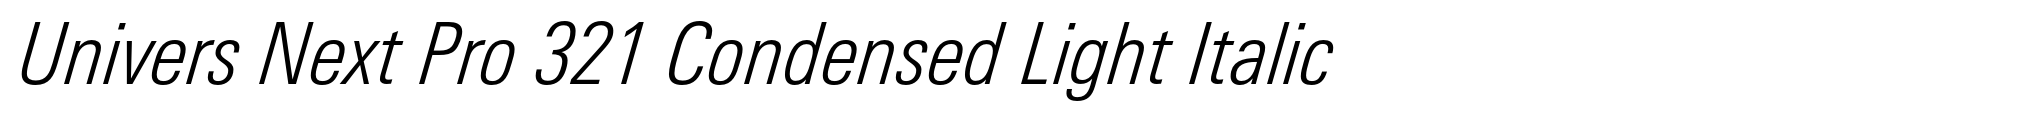 Univers Next Pro 321 Condensed Light Italic image